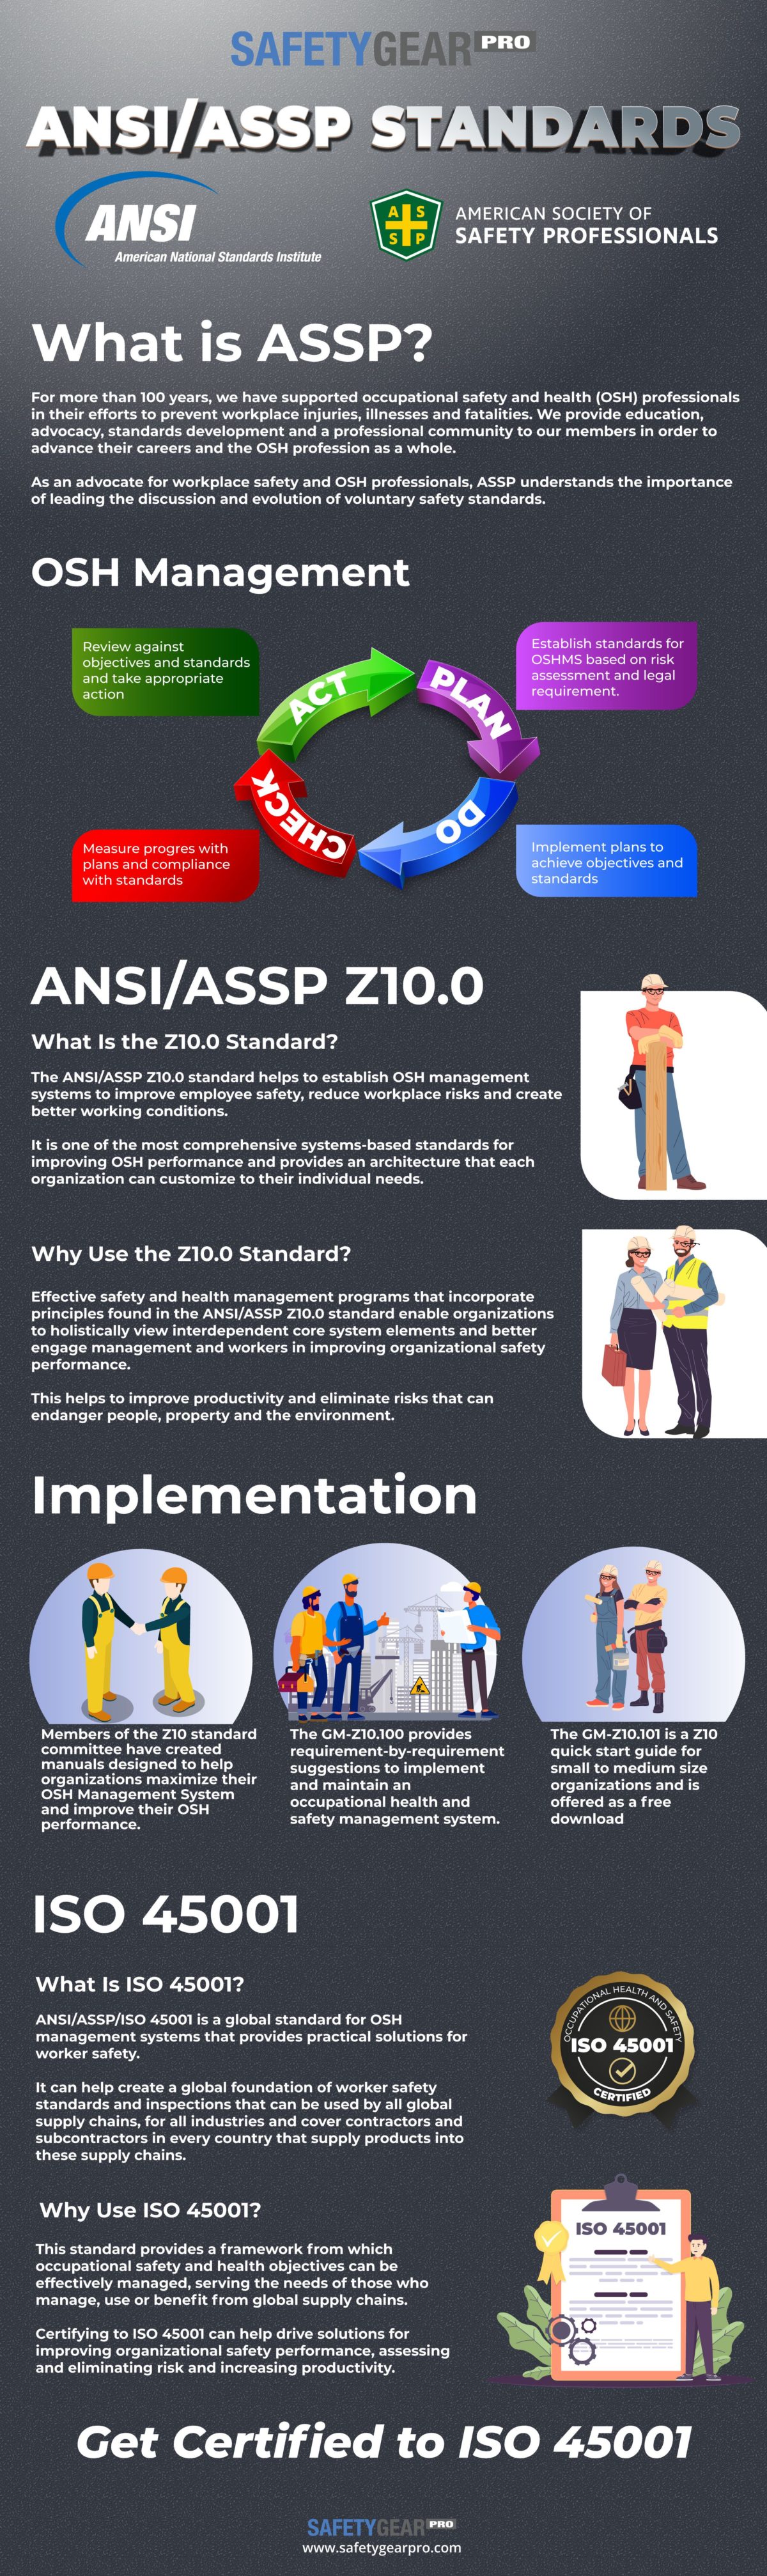 ANSI/ASSP Standards Infographic